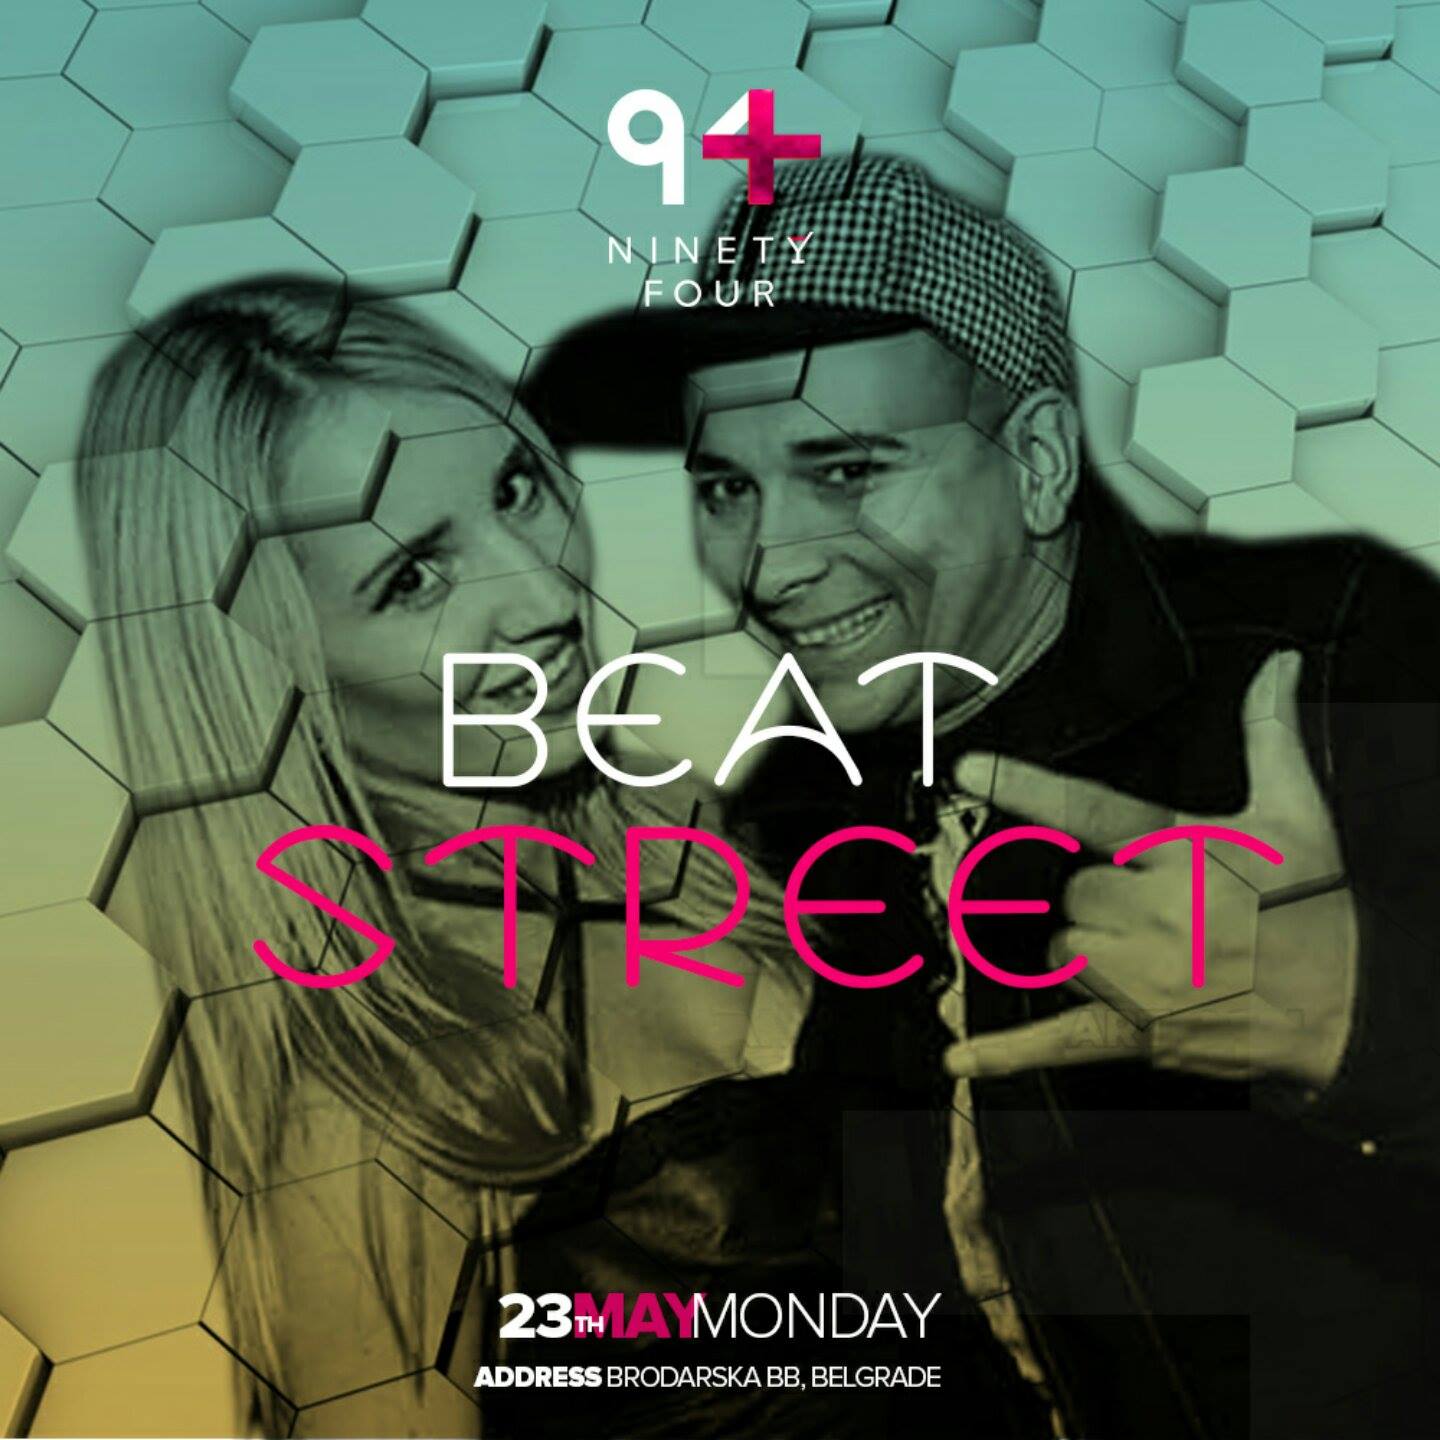 beat street